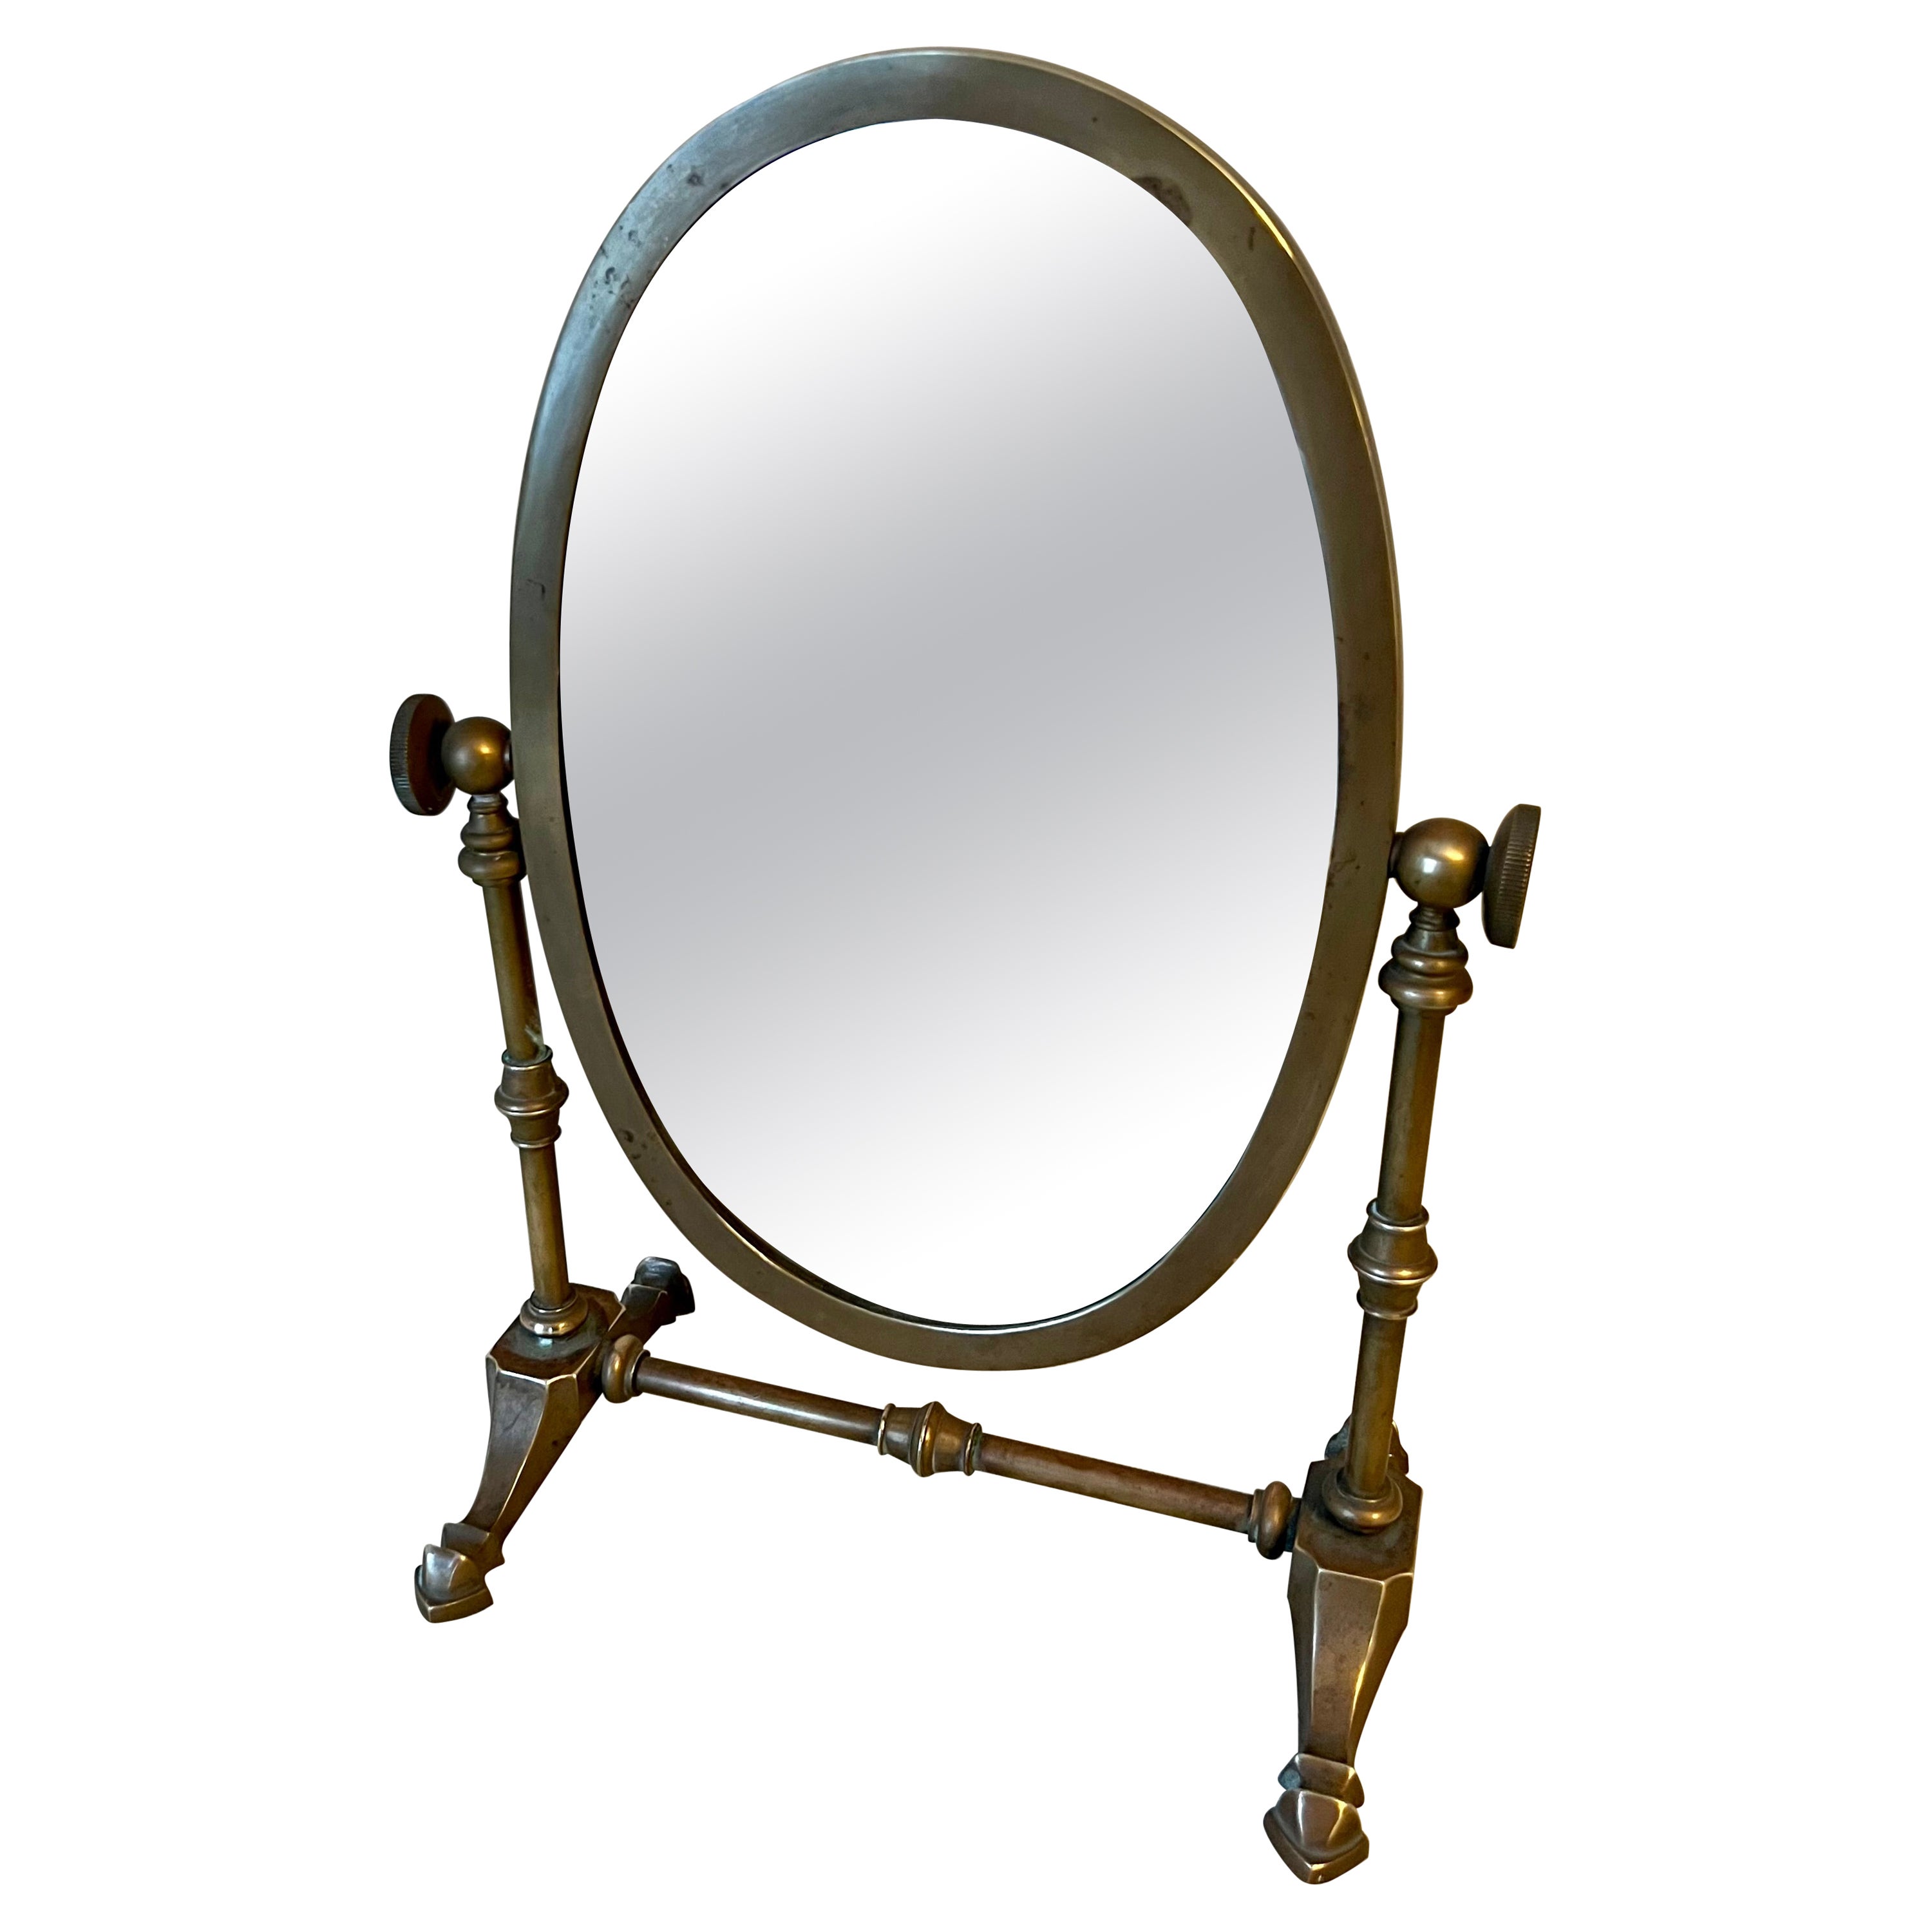 Brass Table or Vanity Shaving Mirror